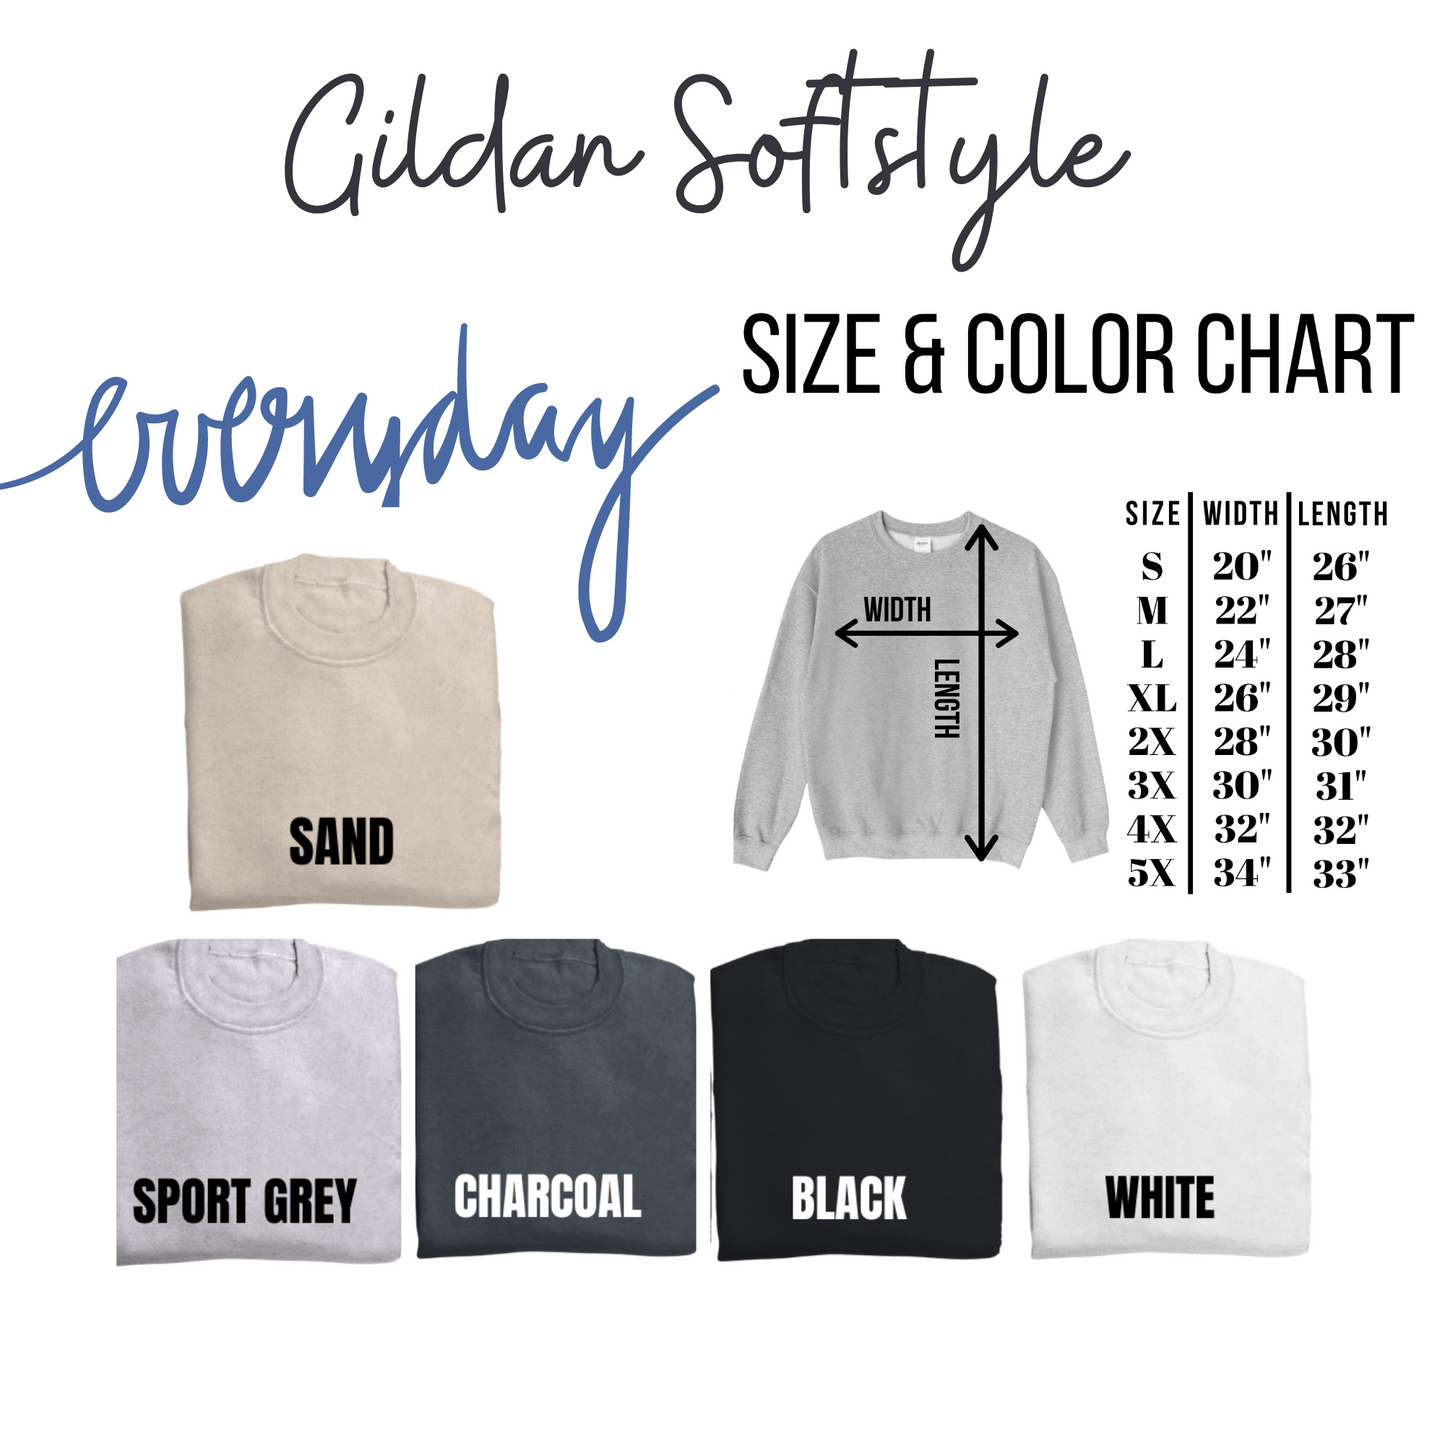 Green Grinch  Gildan Softstyle T-shirt or Sweatshirt